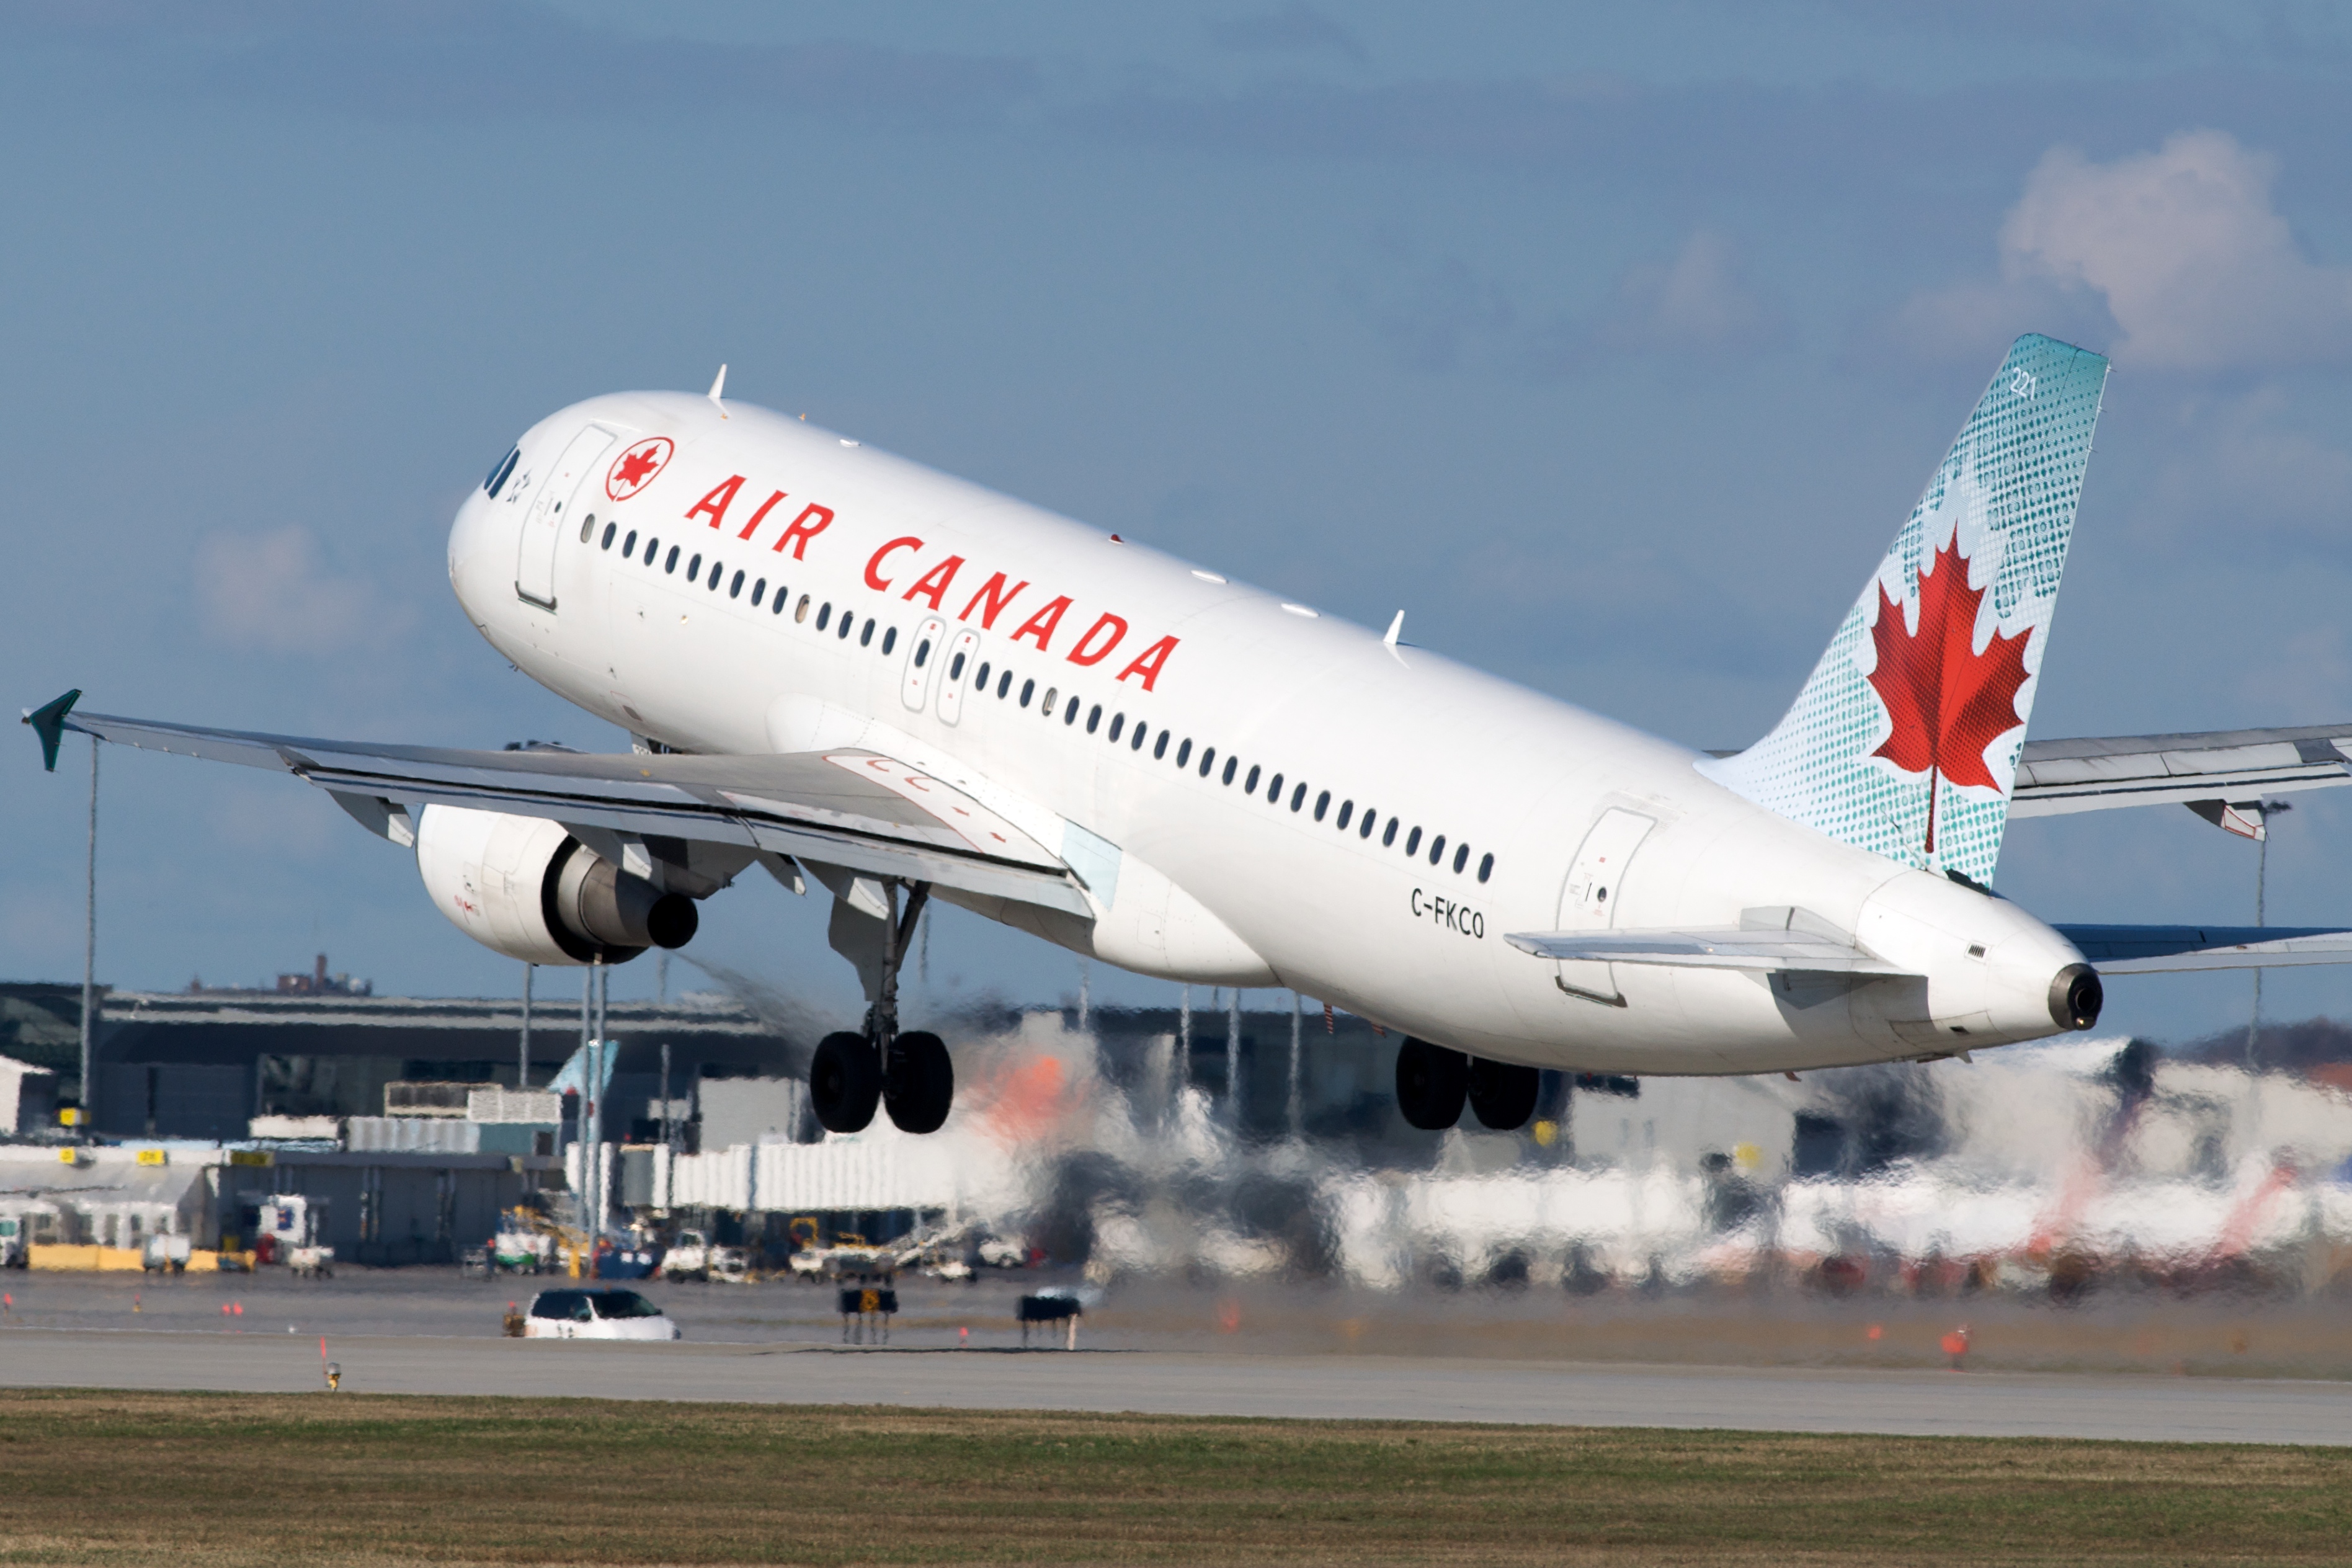 Turbulence injures dozens on Air Canada flight to Australia